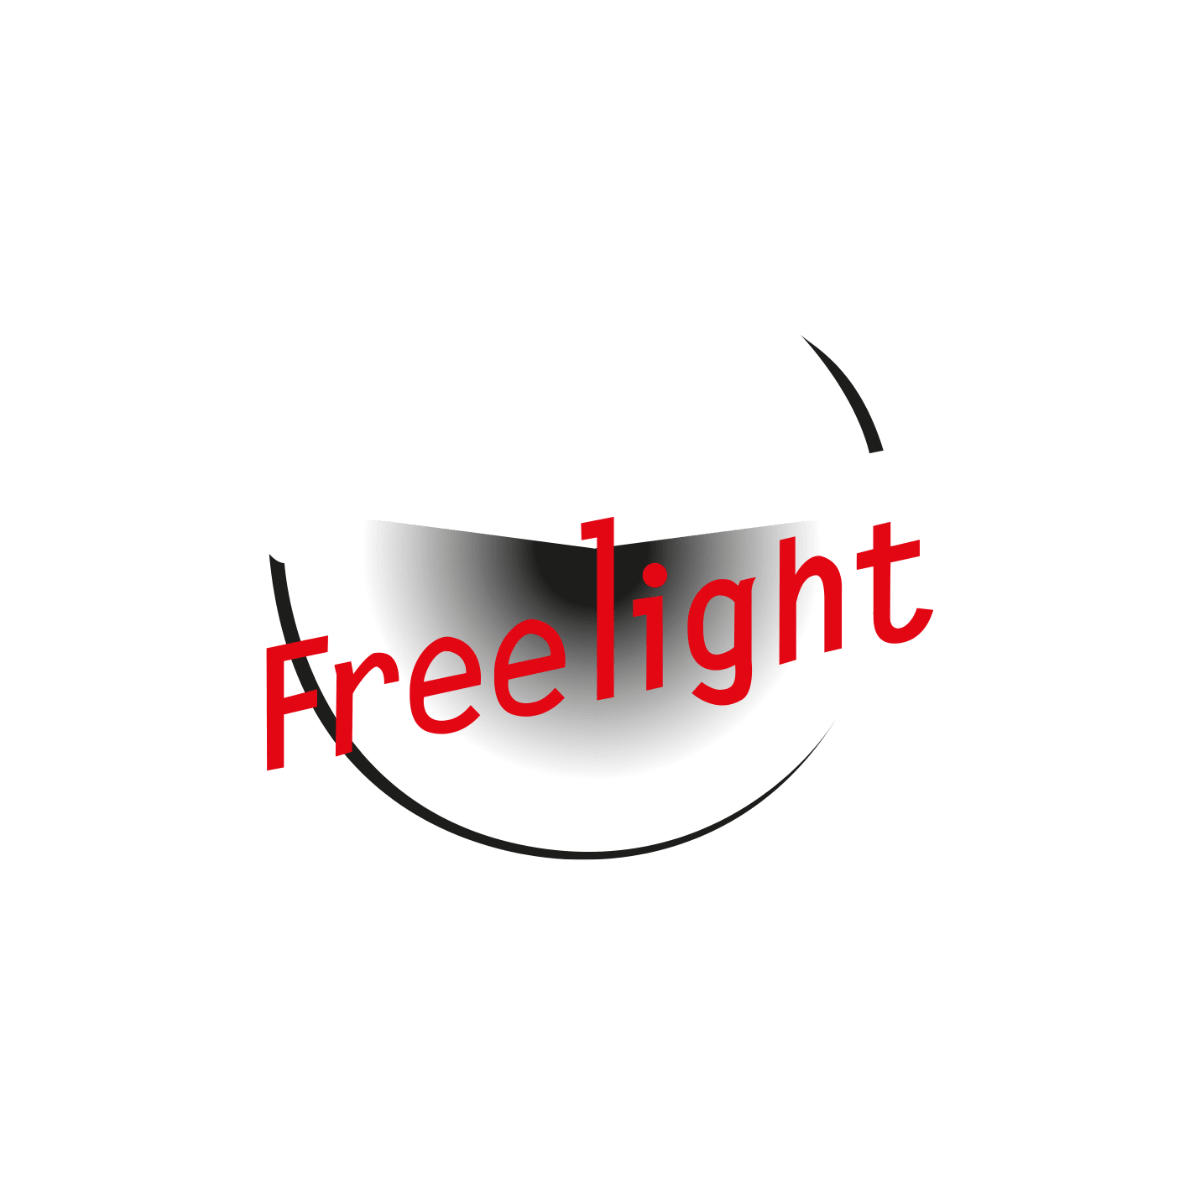 Freelight